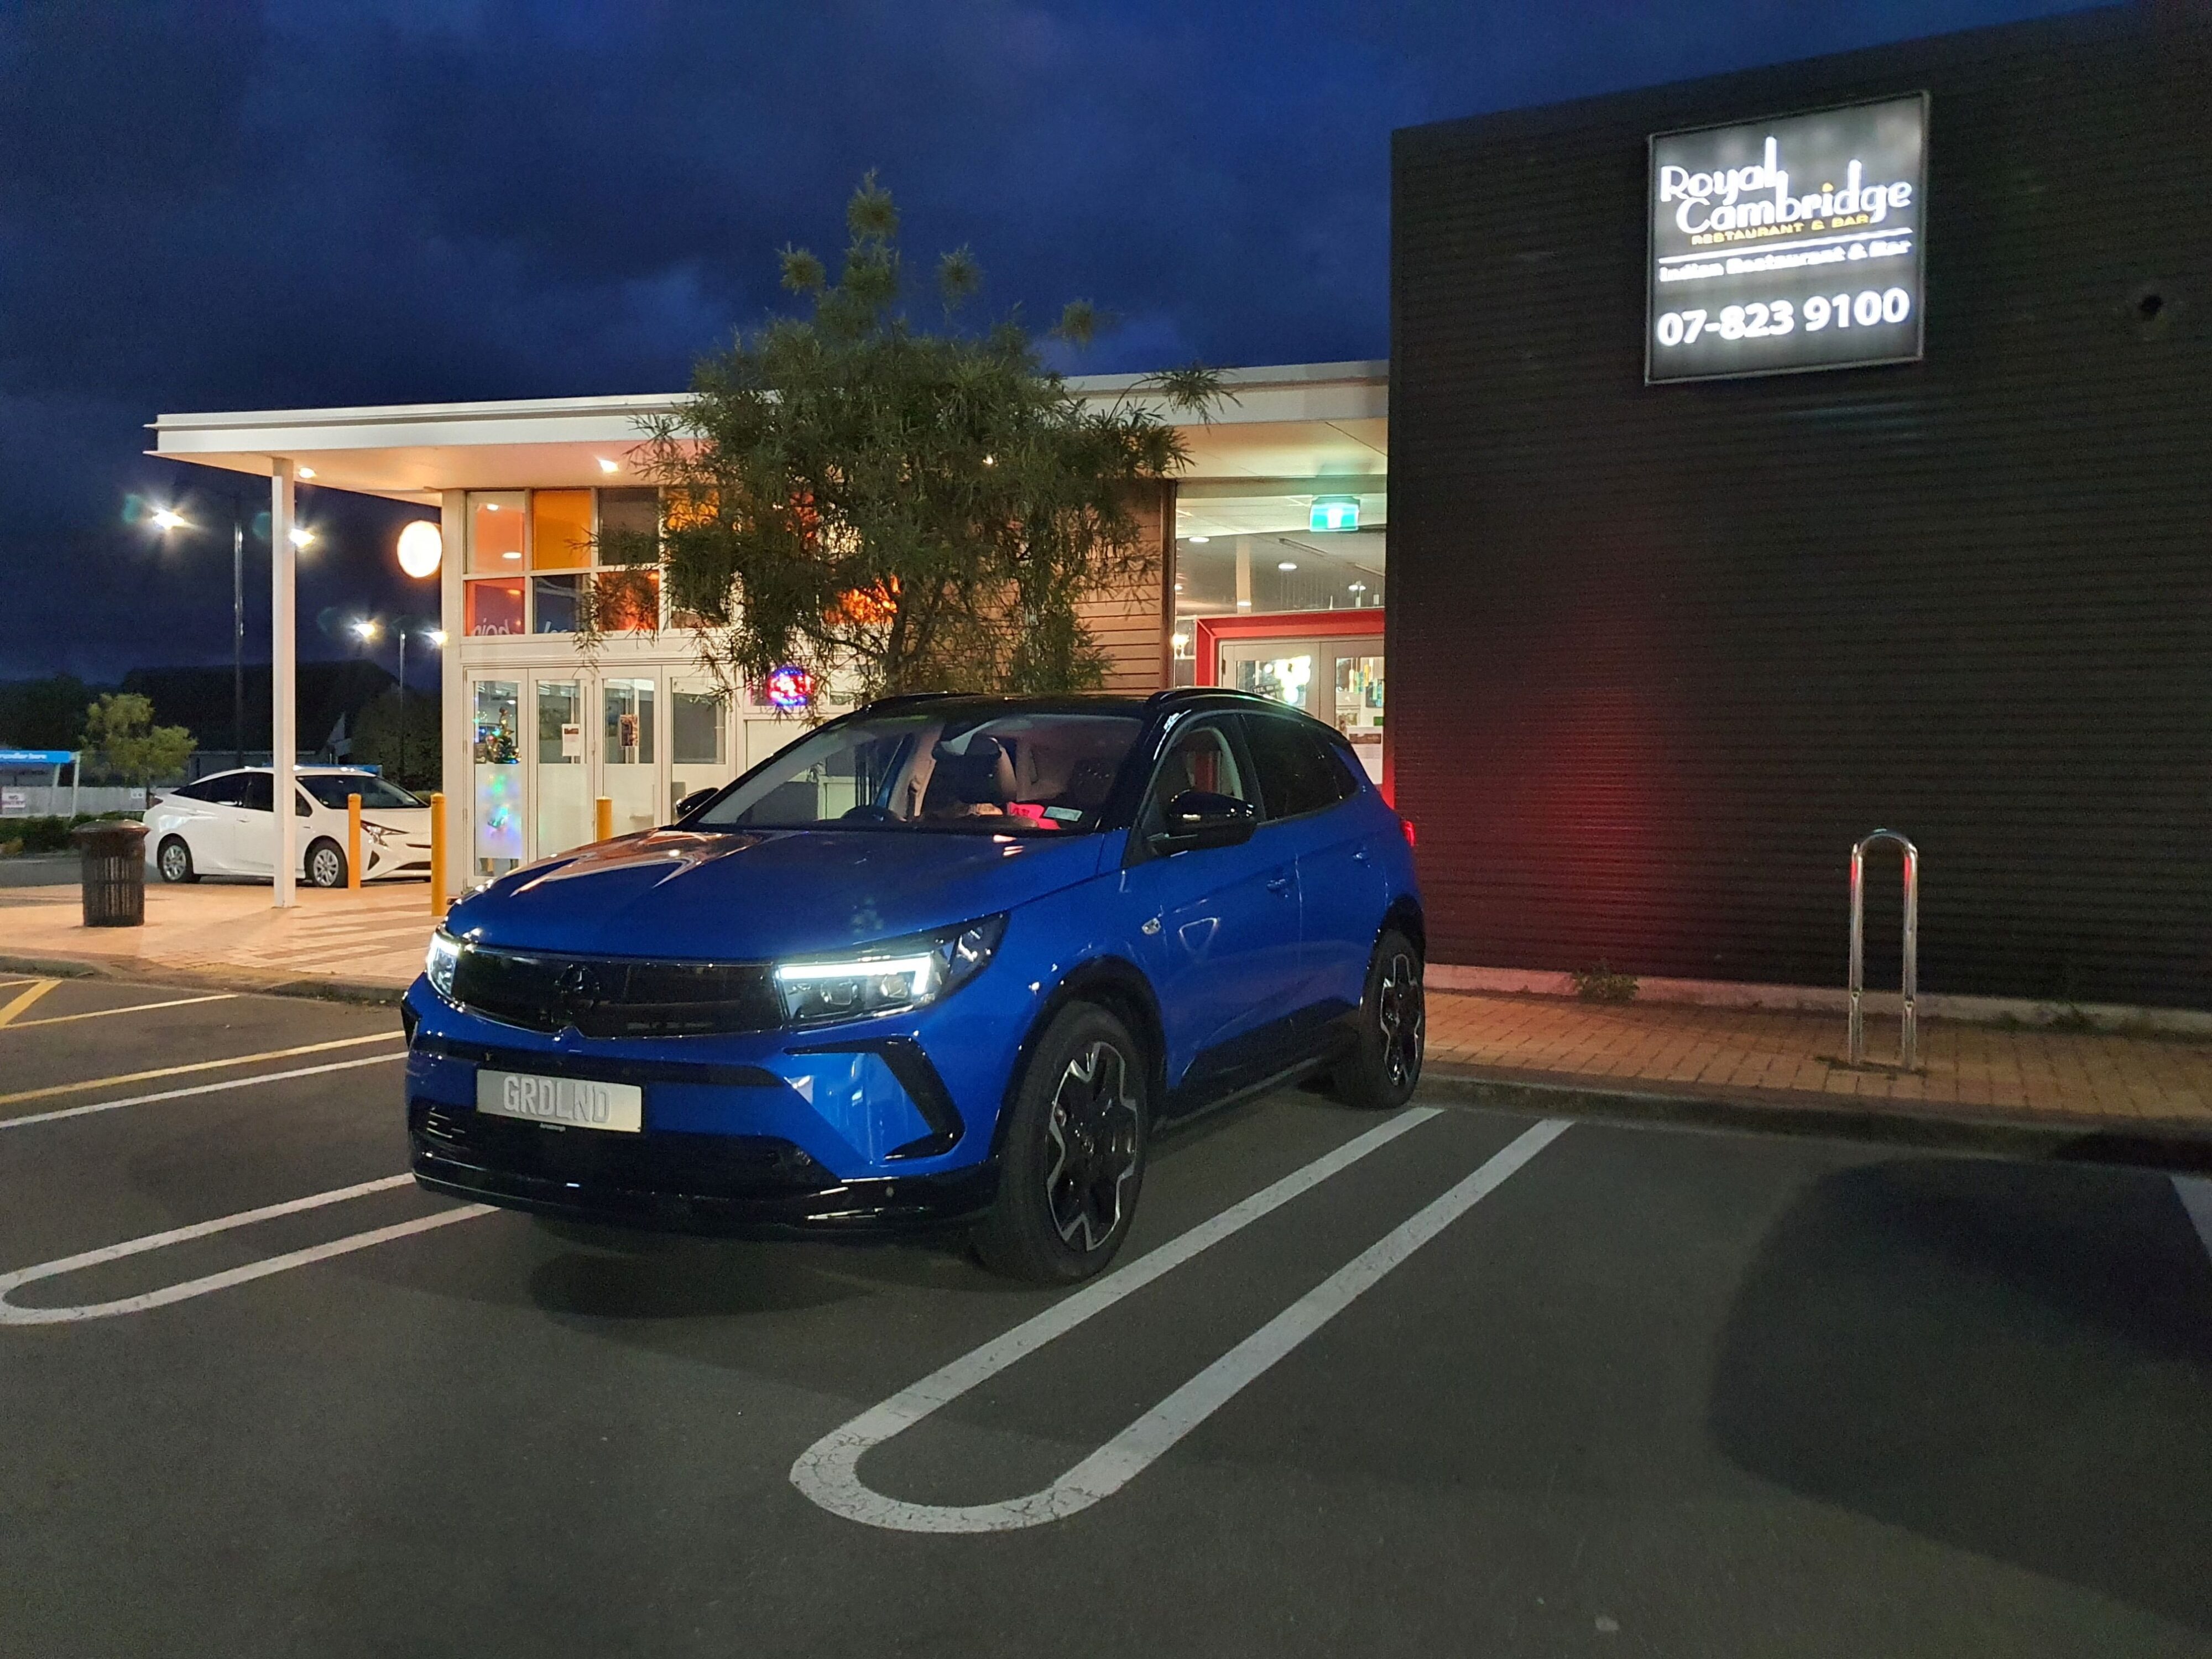 Nighttime photo of a Cobalt Blue Opel Grandland SRi outside the Royal Indian Restaurant, Cambridge, Waikato, New Zealand.